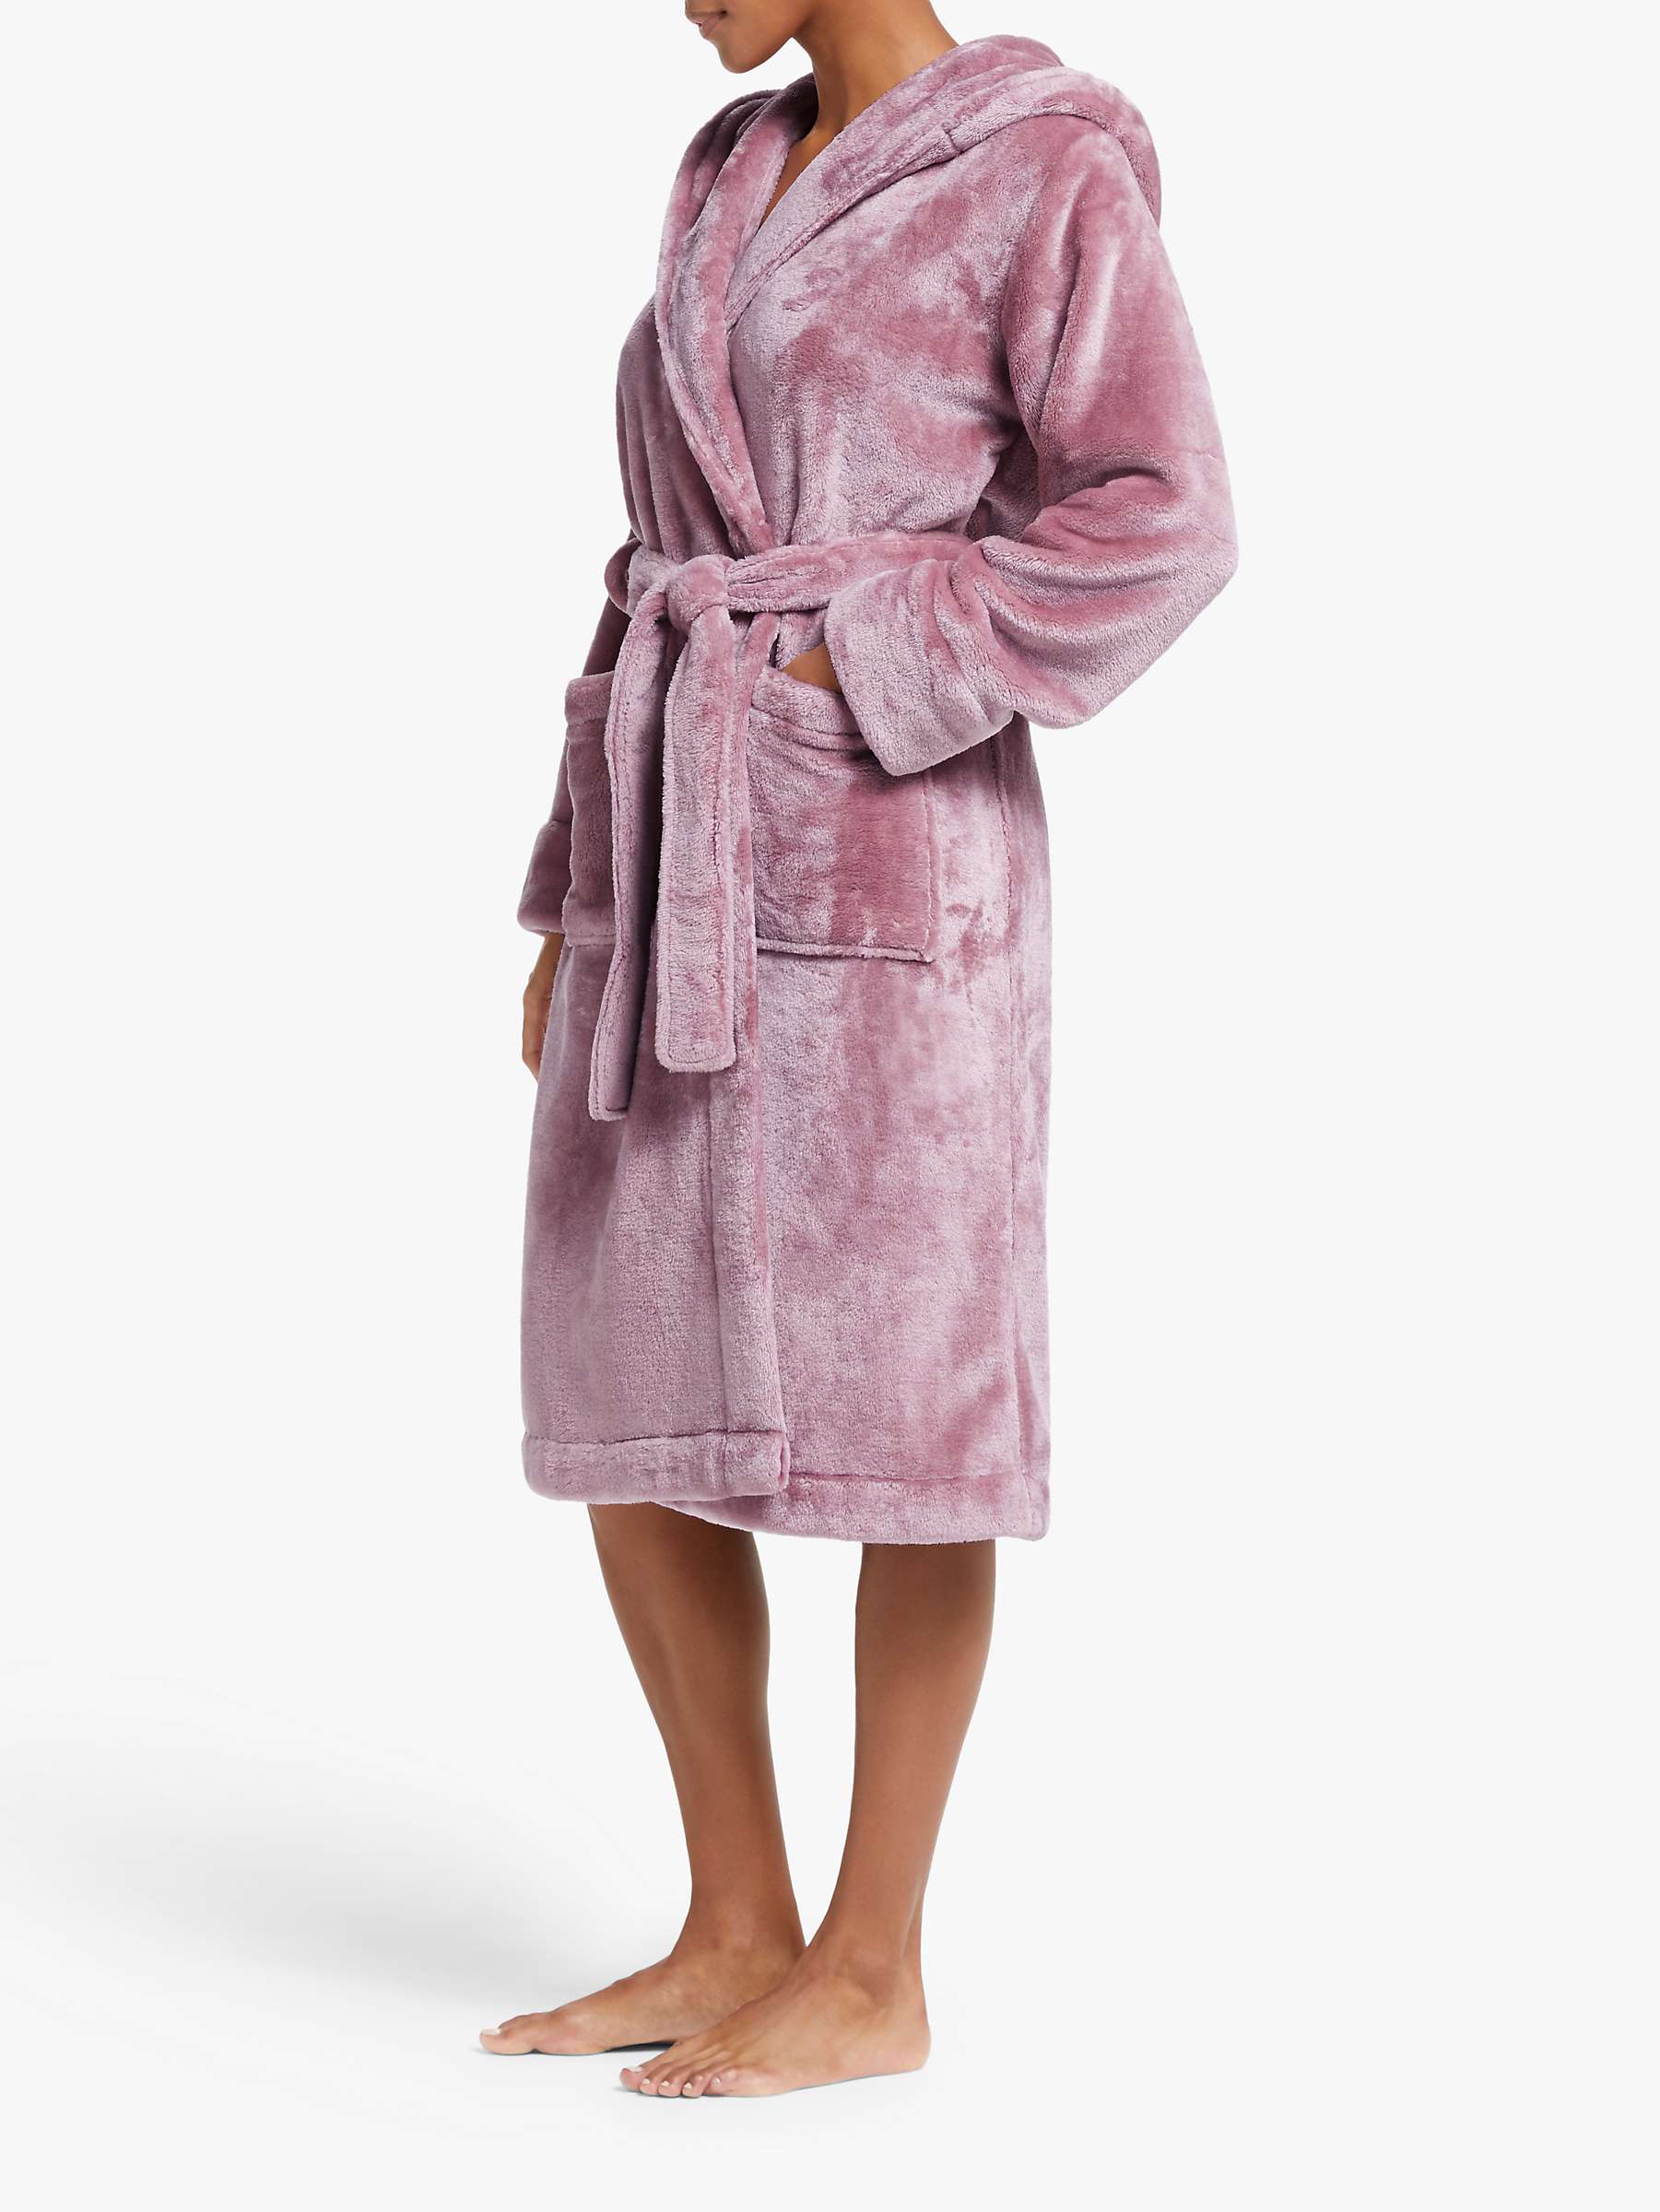 John Lewis Hi Pile Fleece Robe in Pink Womens Clothing Nightwear and sleepwear Robes robe dresses and bathrobes 